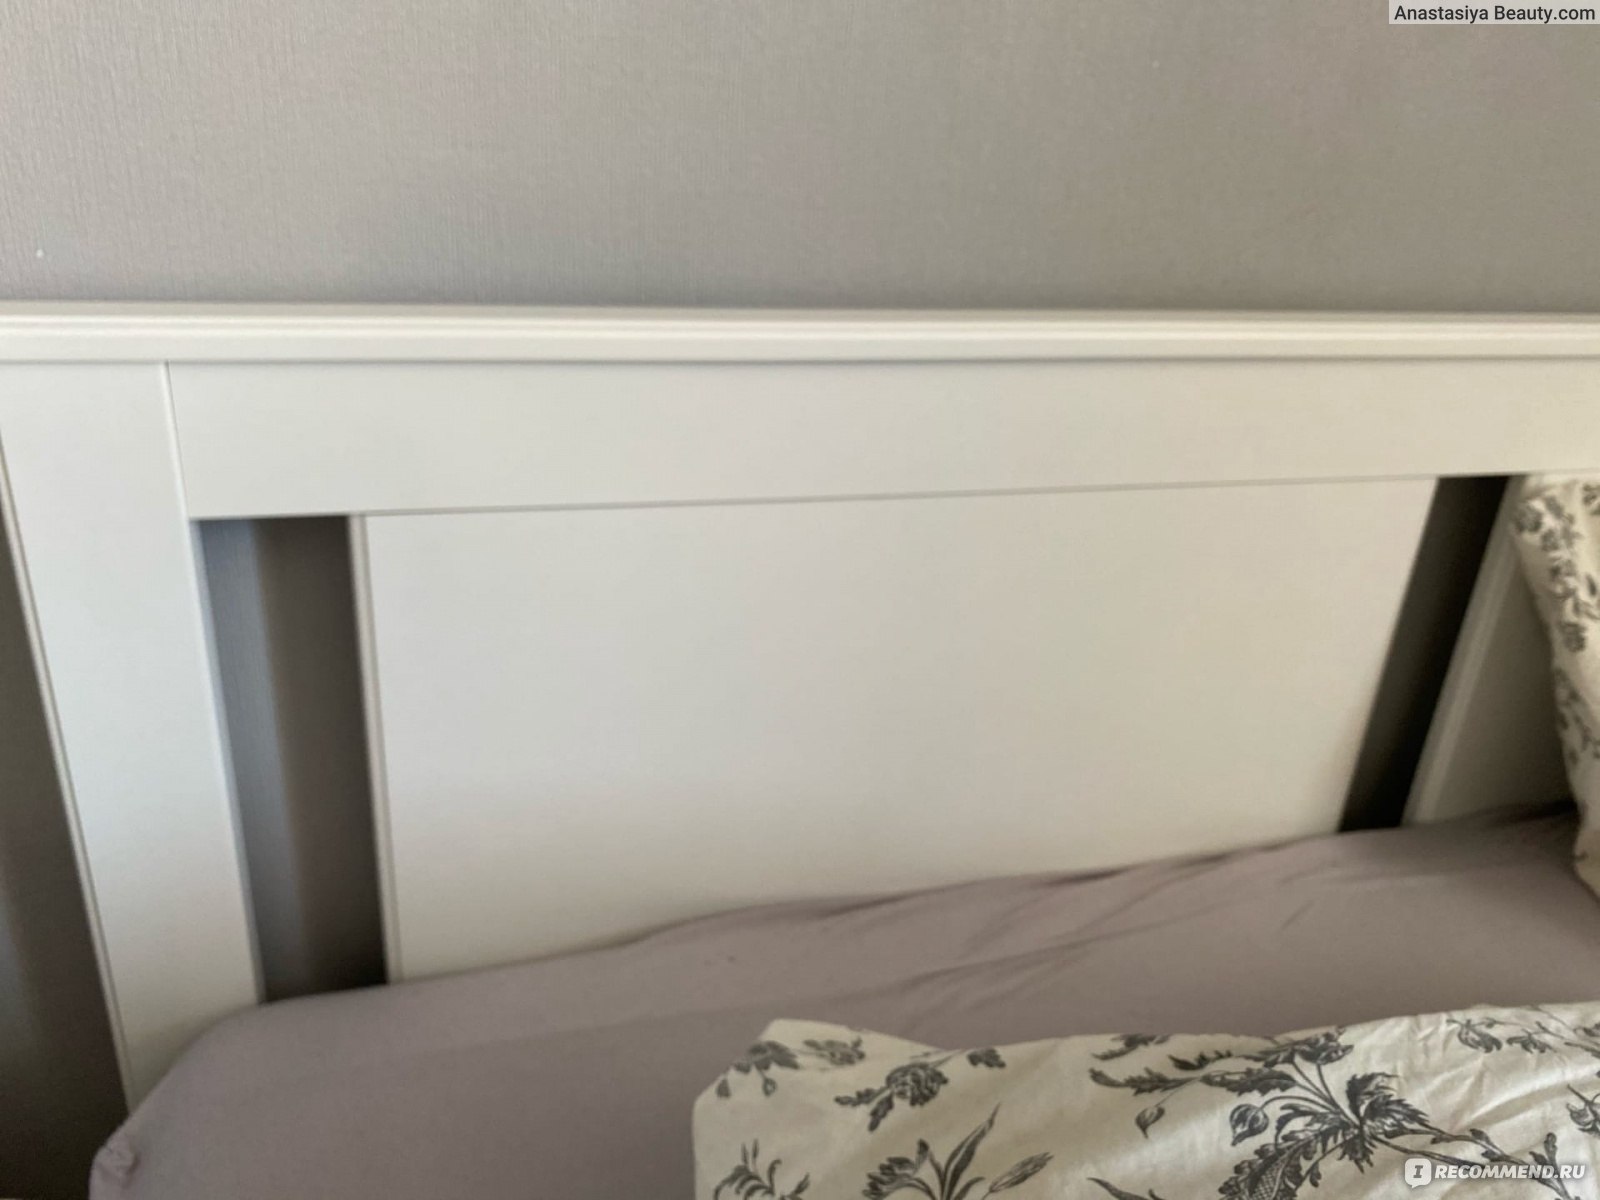 Инструкция по сборке кровати икеа сонгесанд